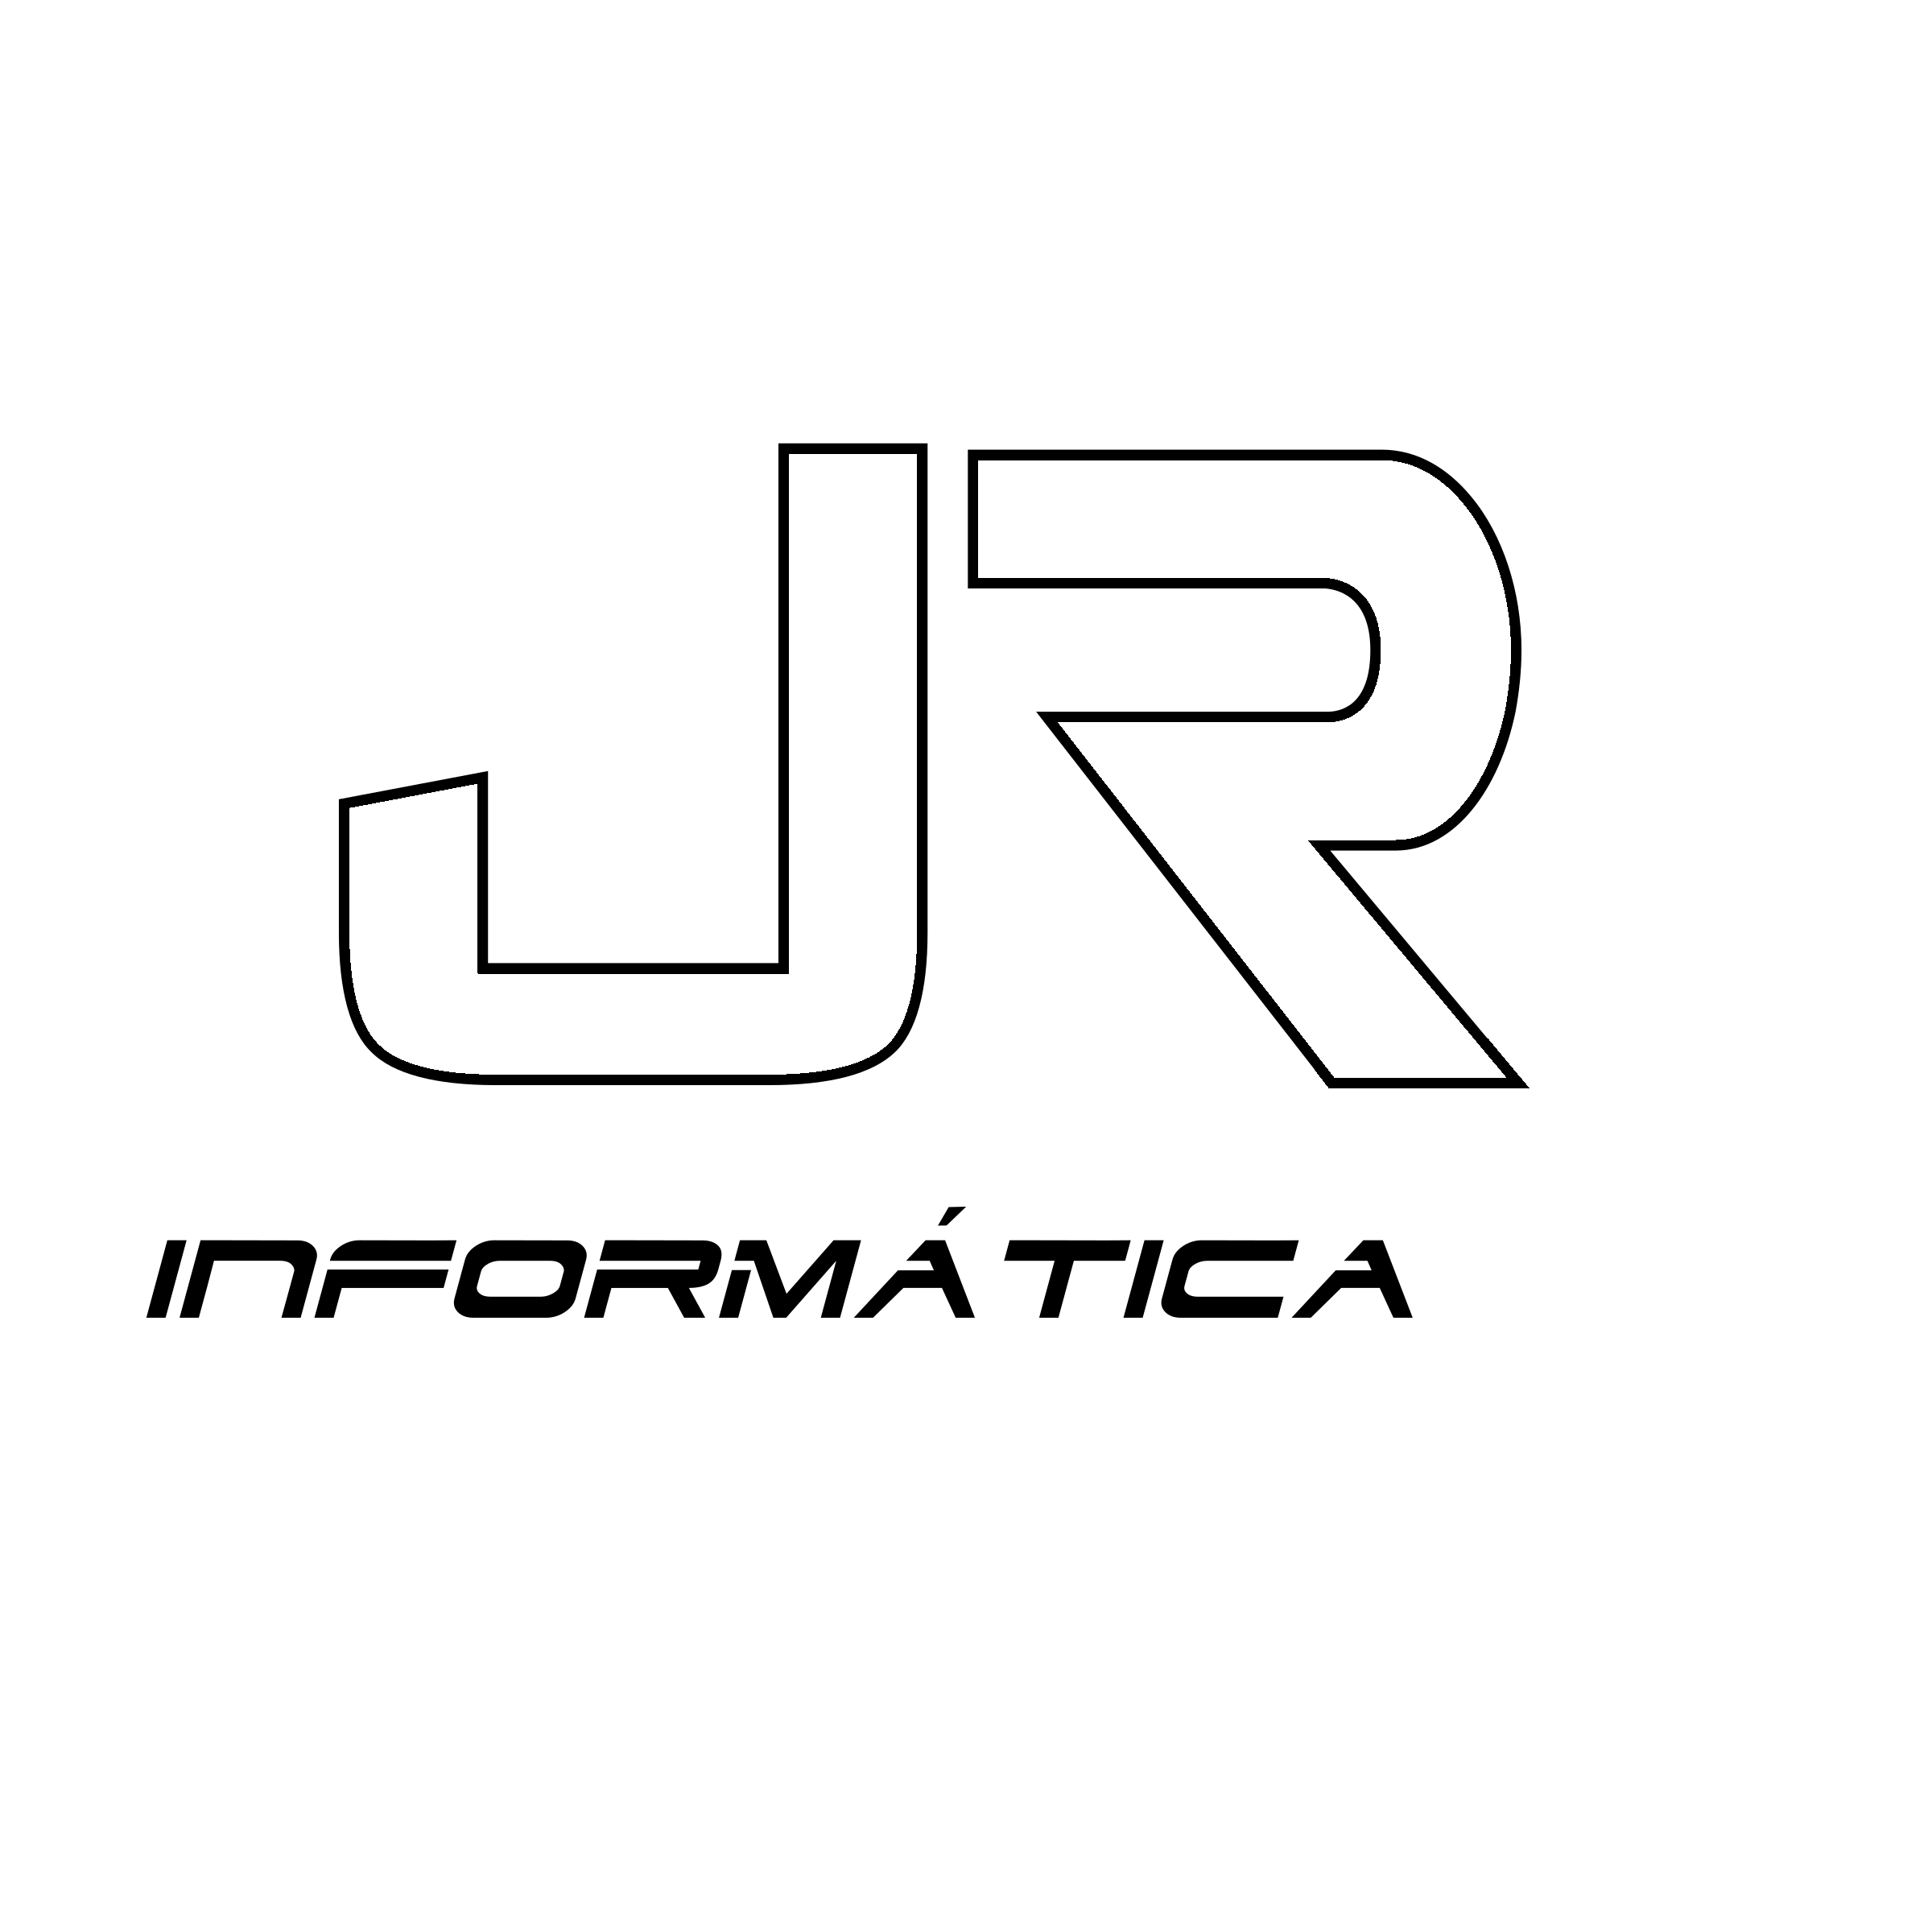 Informatica Logo - JR Informatica Logo PNG Transparent & SVG Vector - Freebie Supply